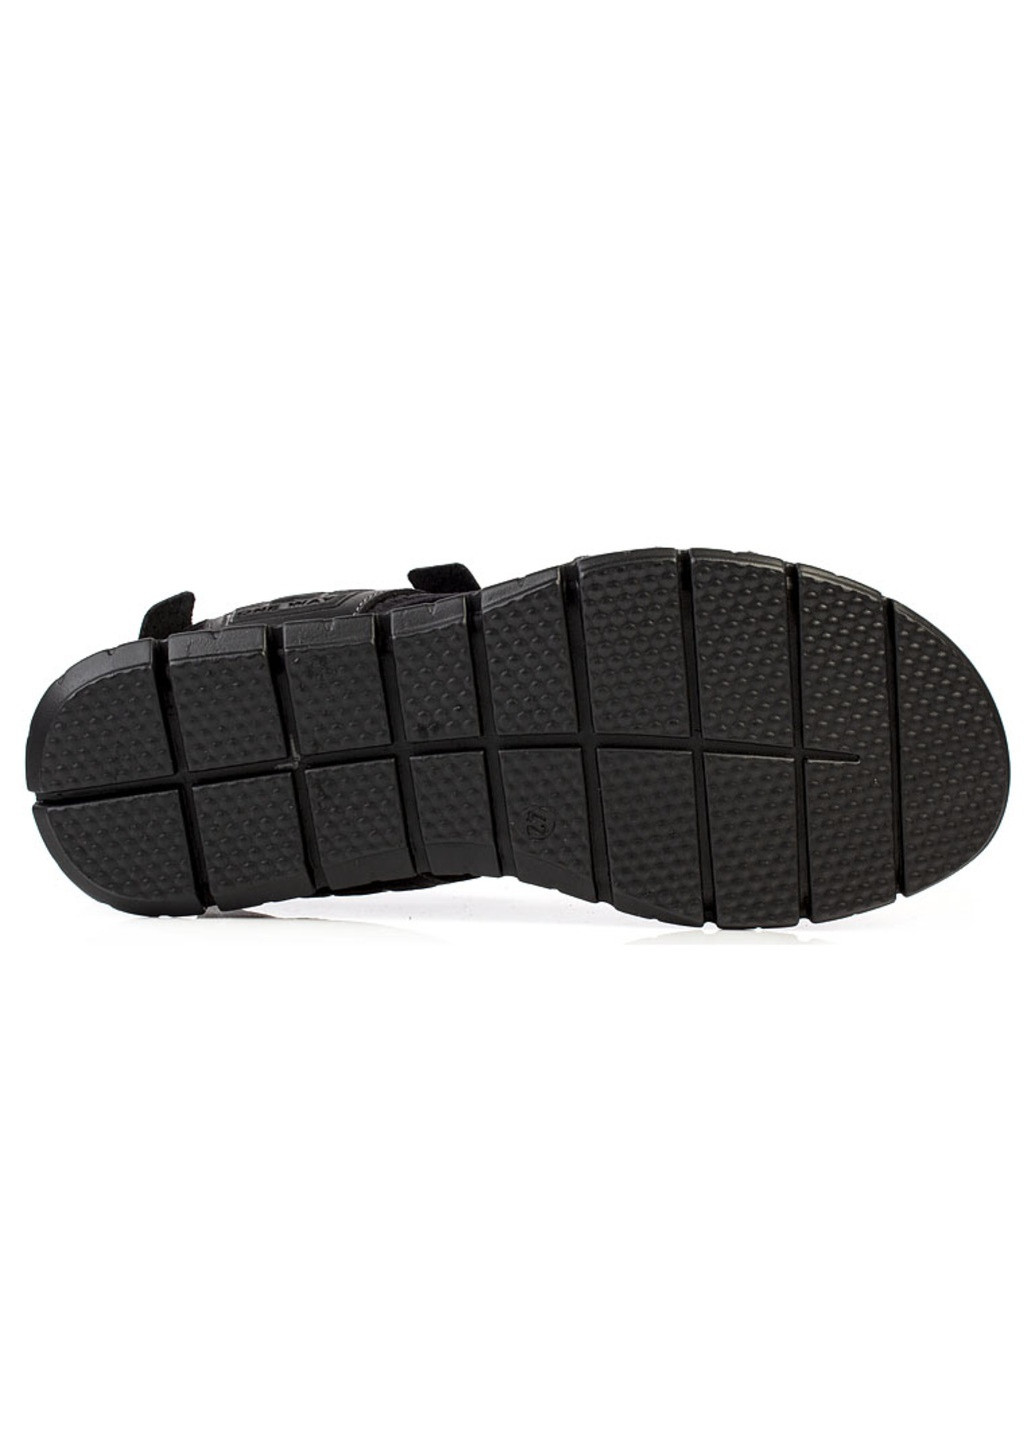 Спортивные сандалии мужские бренда 9301295_(1) One Way на липучке